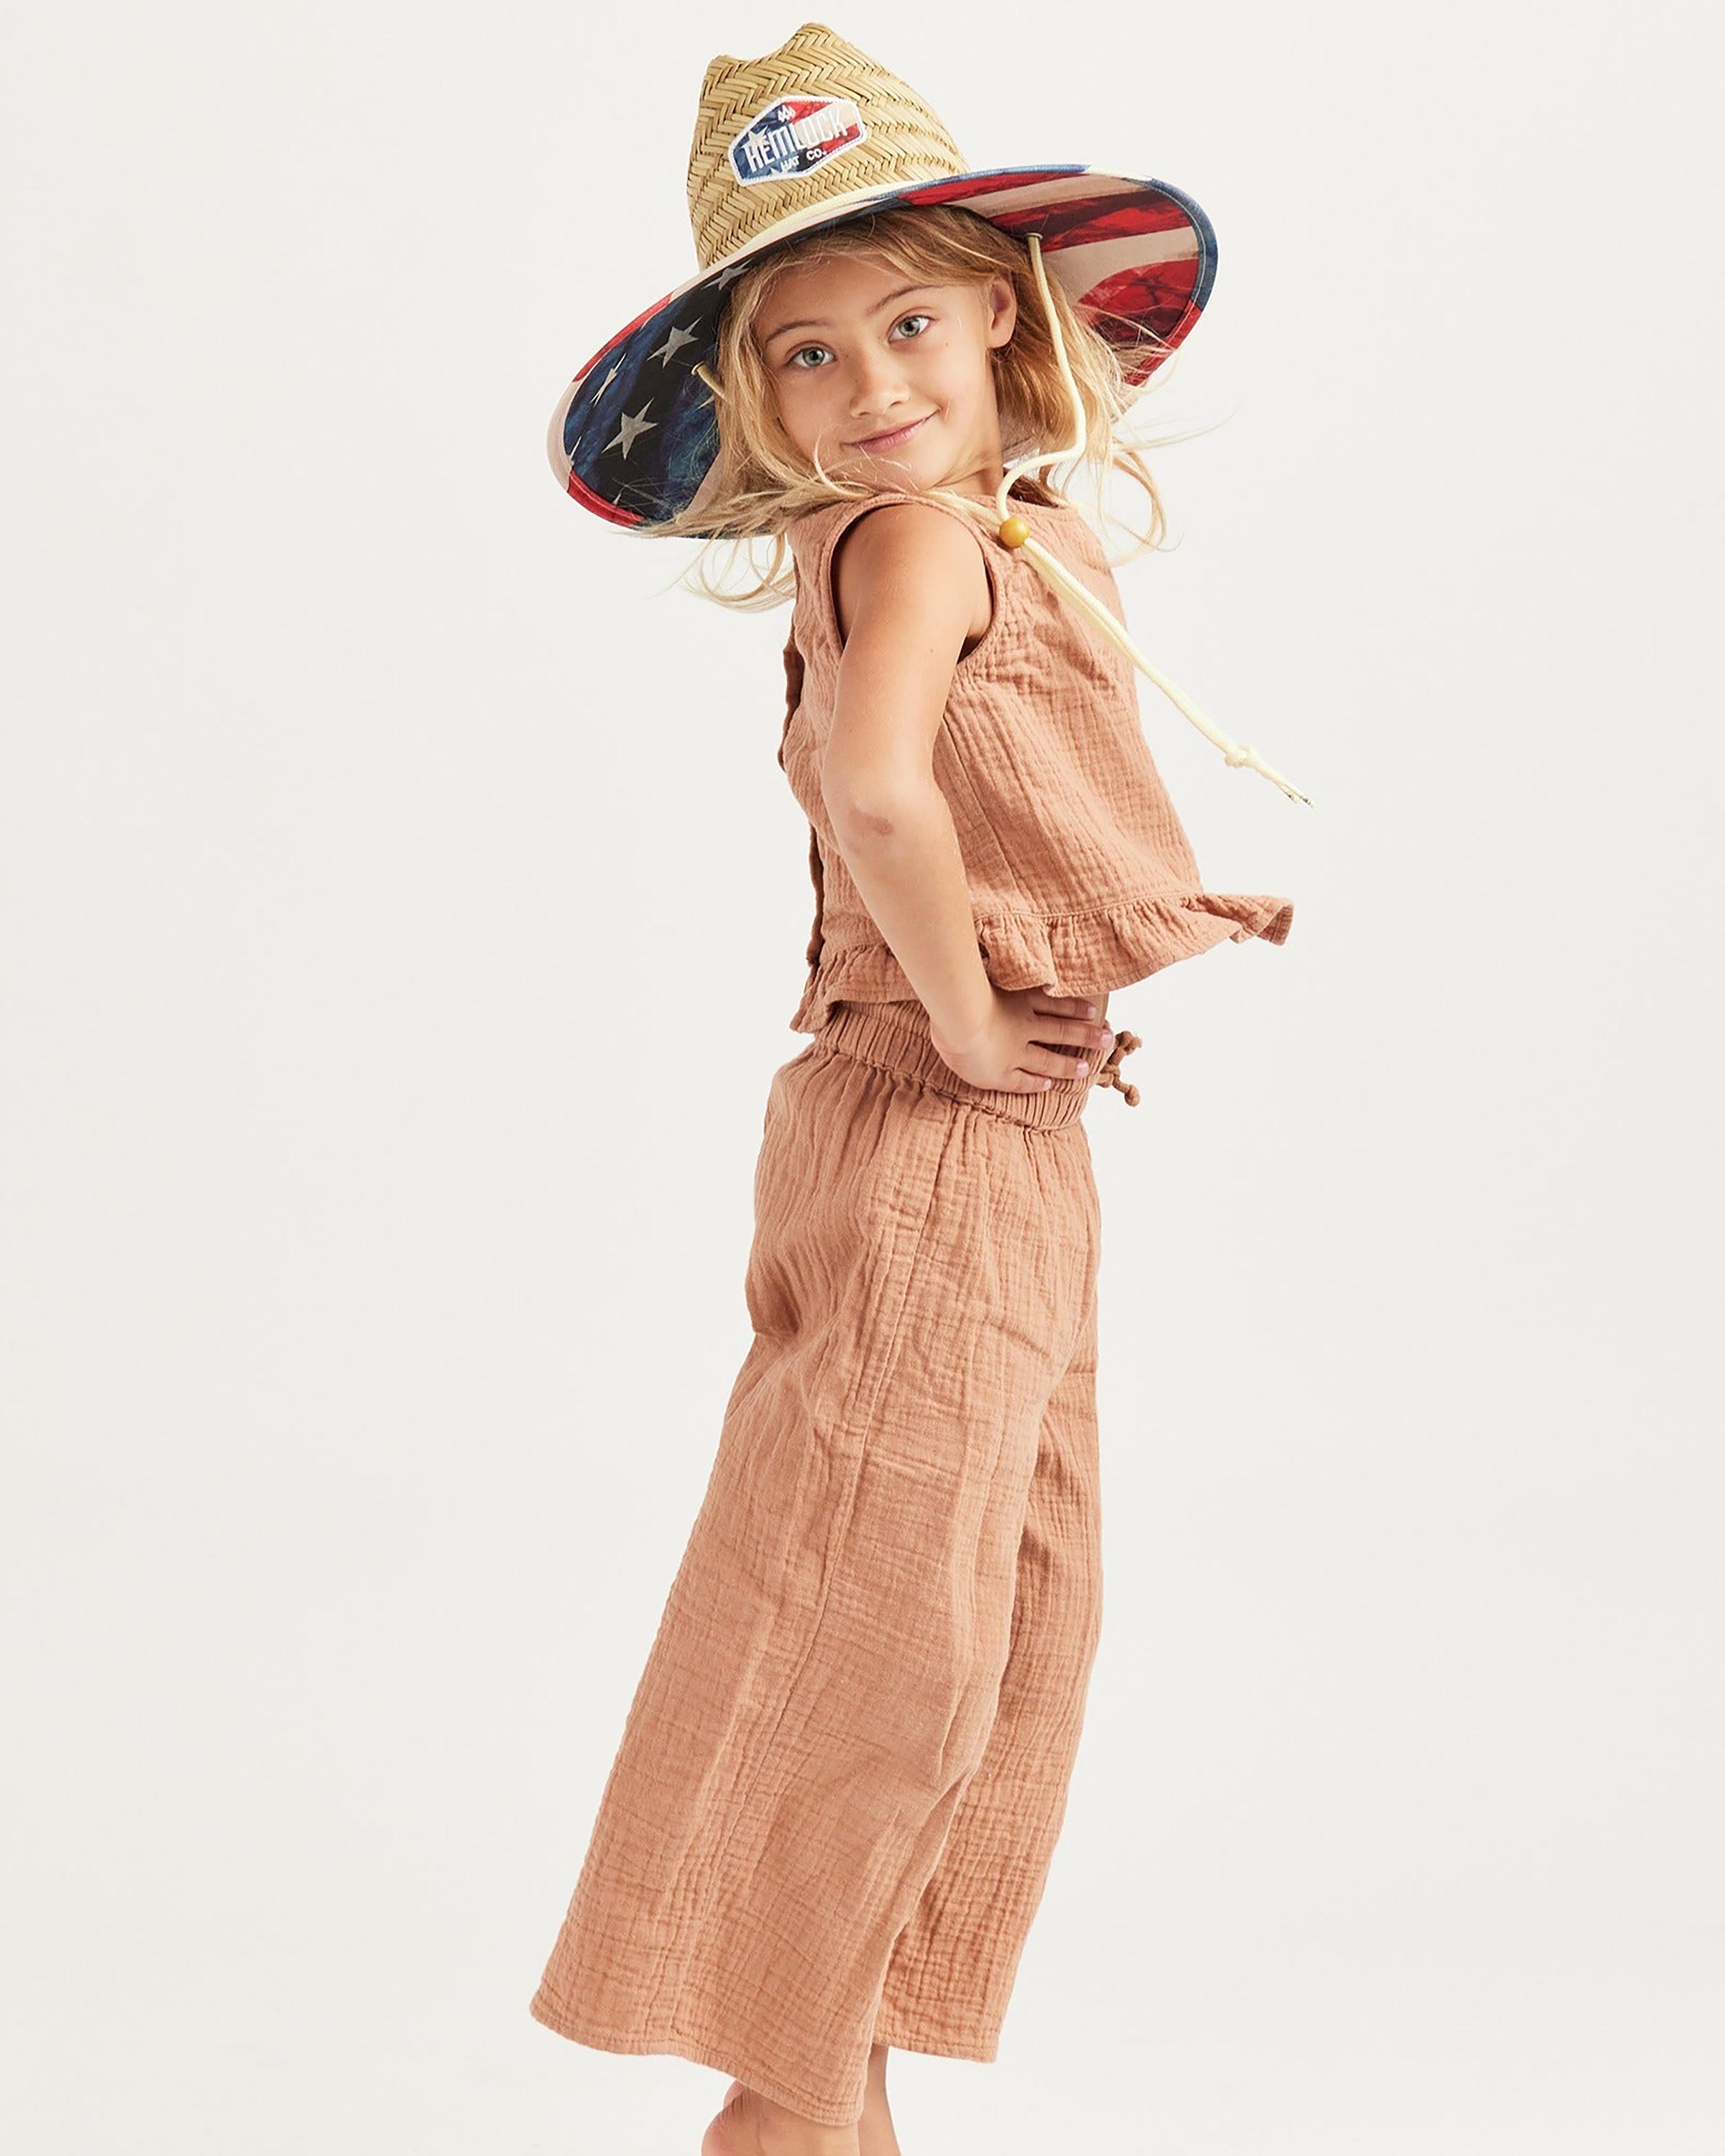 Hemlock Girl model wearing Brave Big Kids Straw Lifeguard Hat